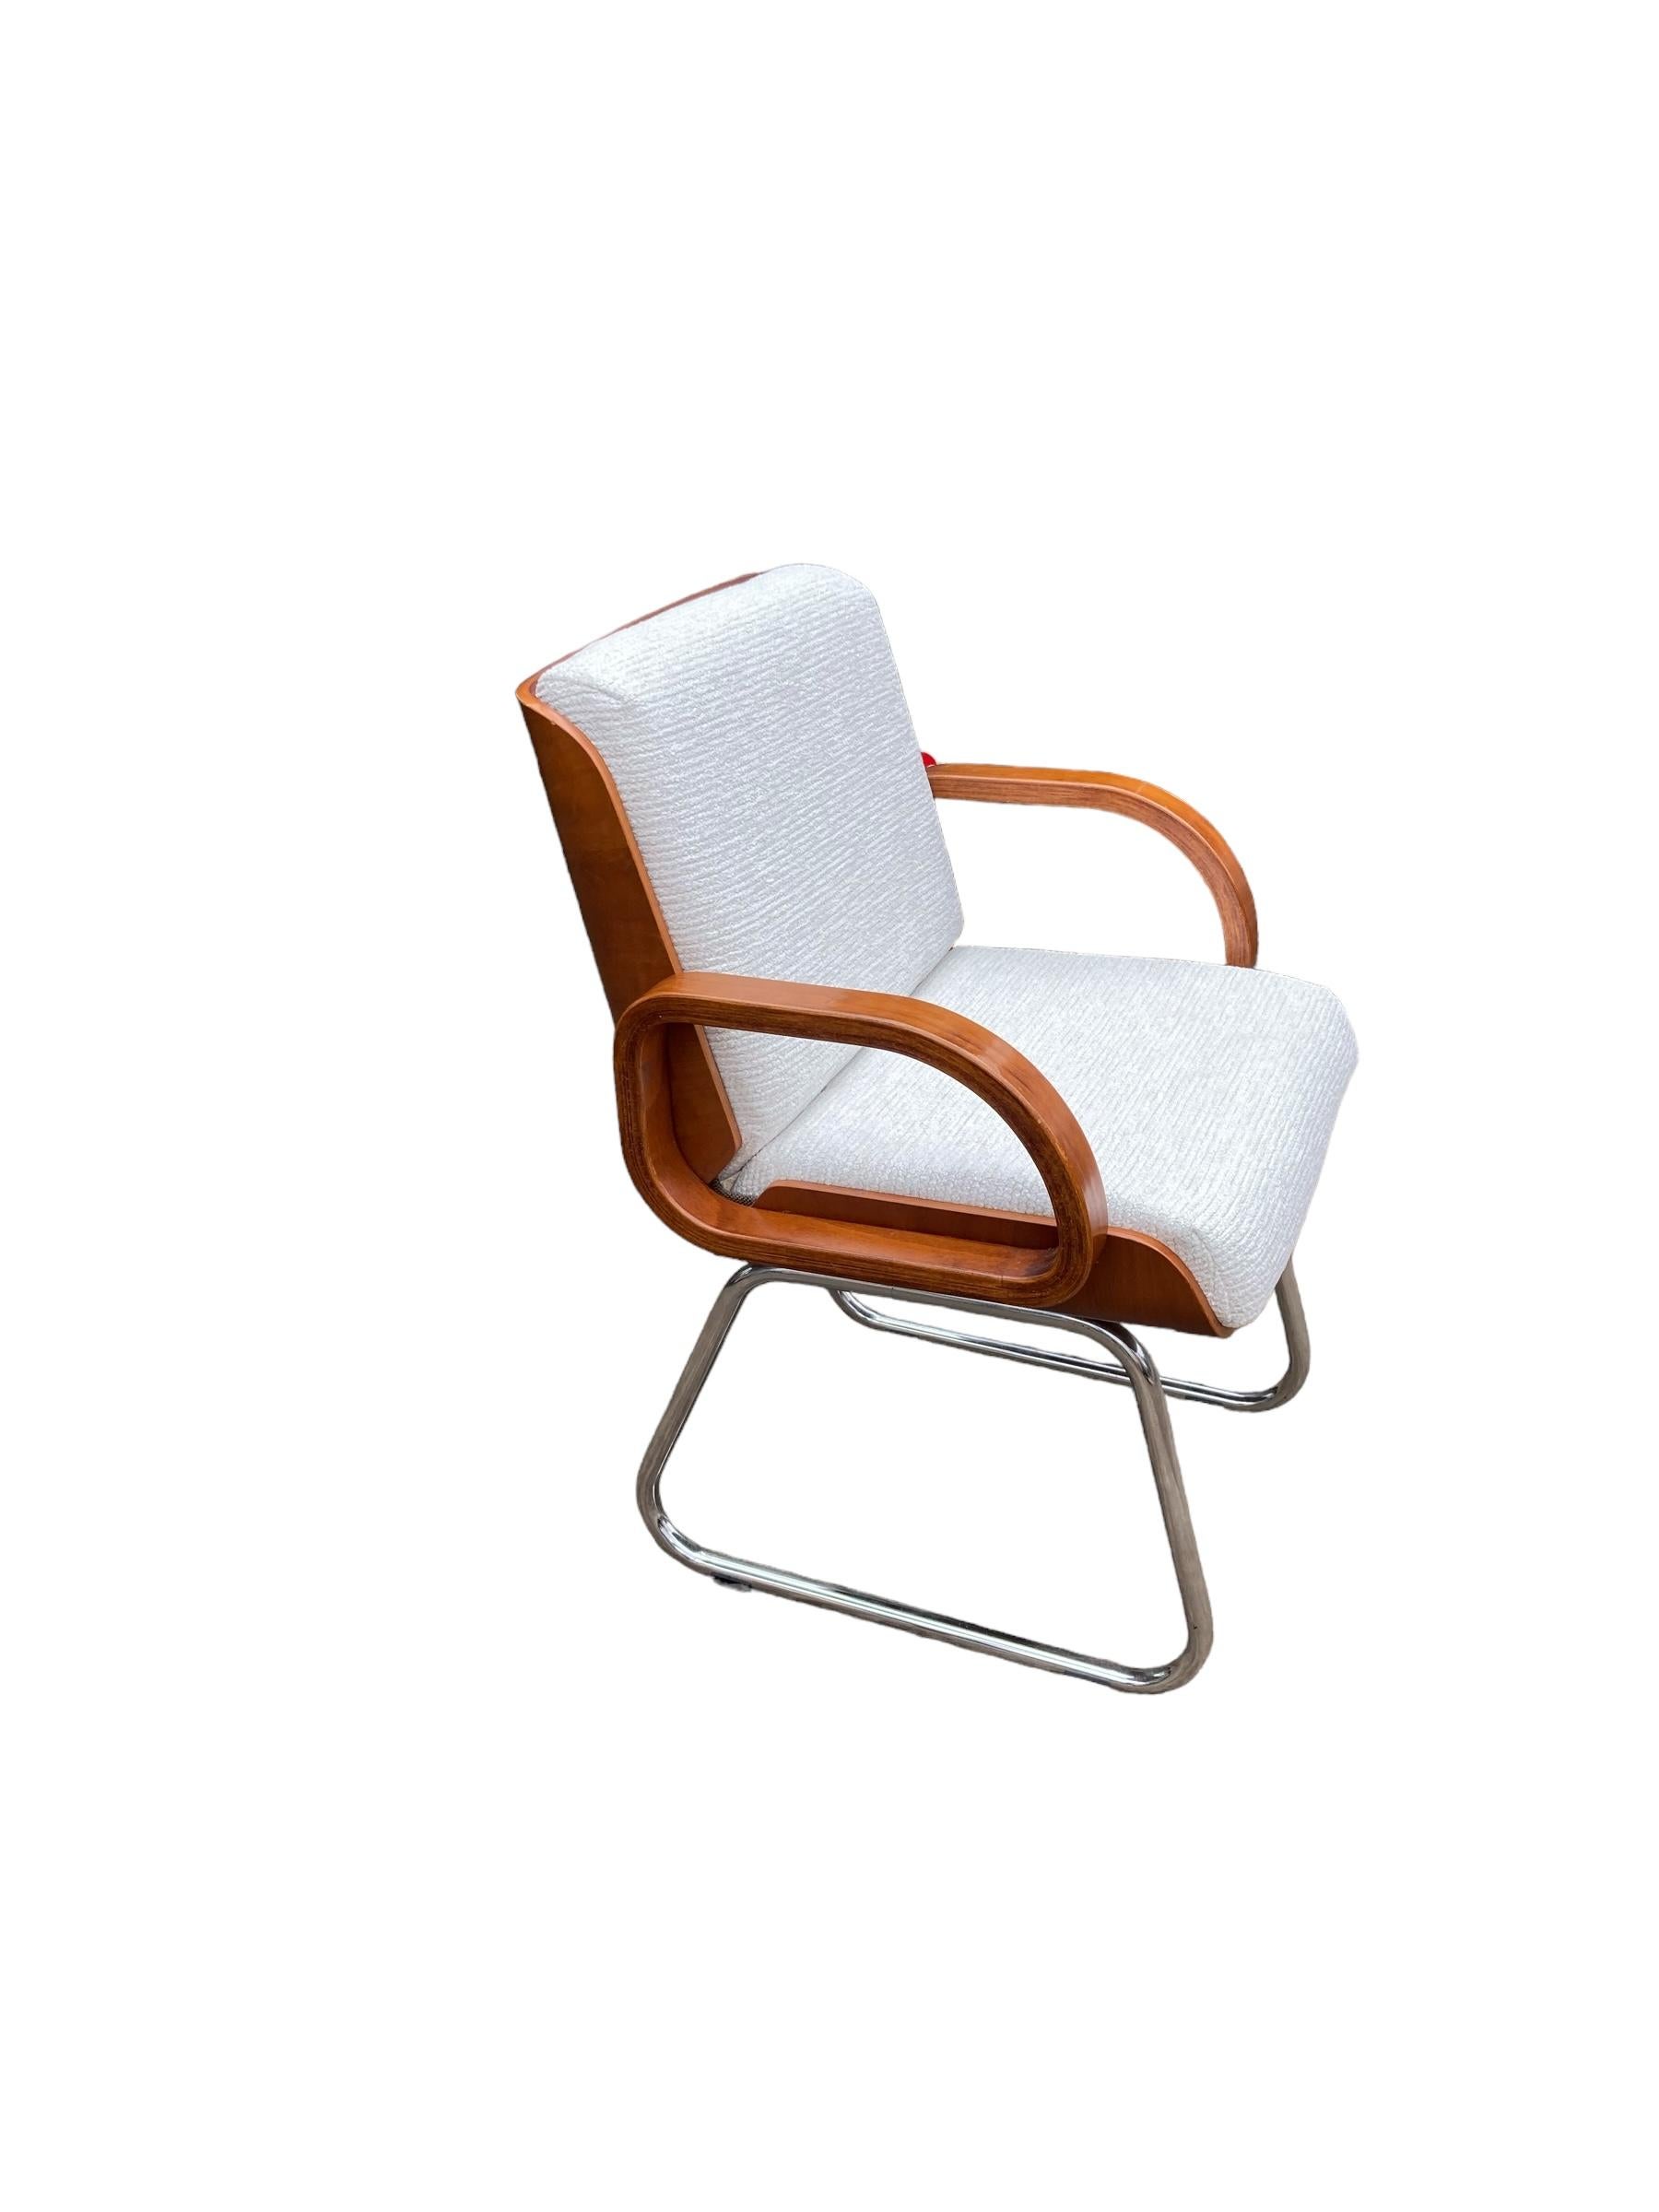 Bouclé Gordon Russell Mid Century Bauhaus Style Teak and Chrome Office chair For Sale